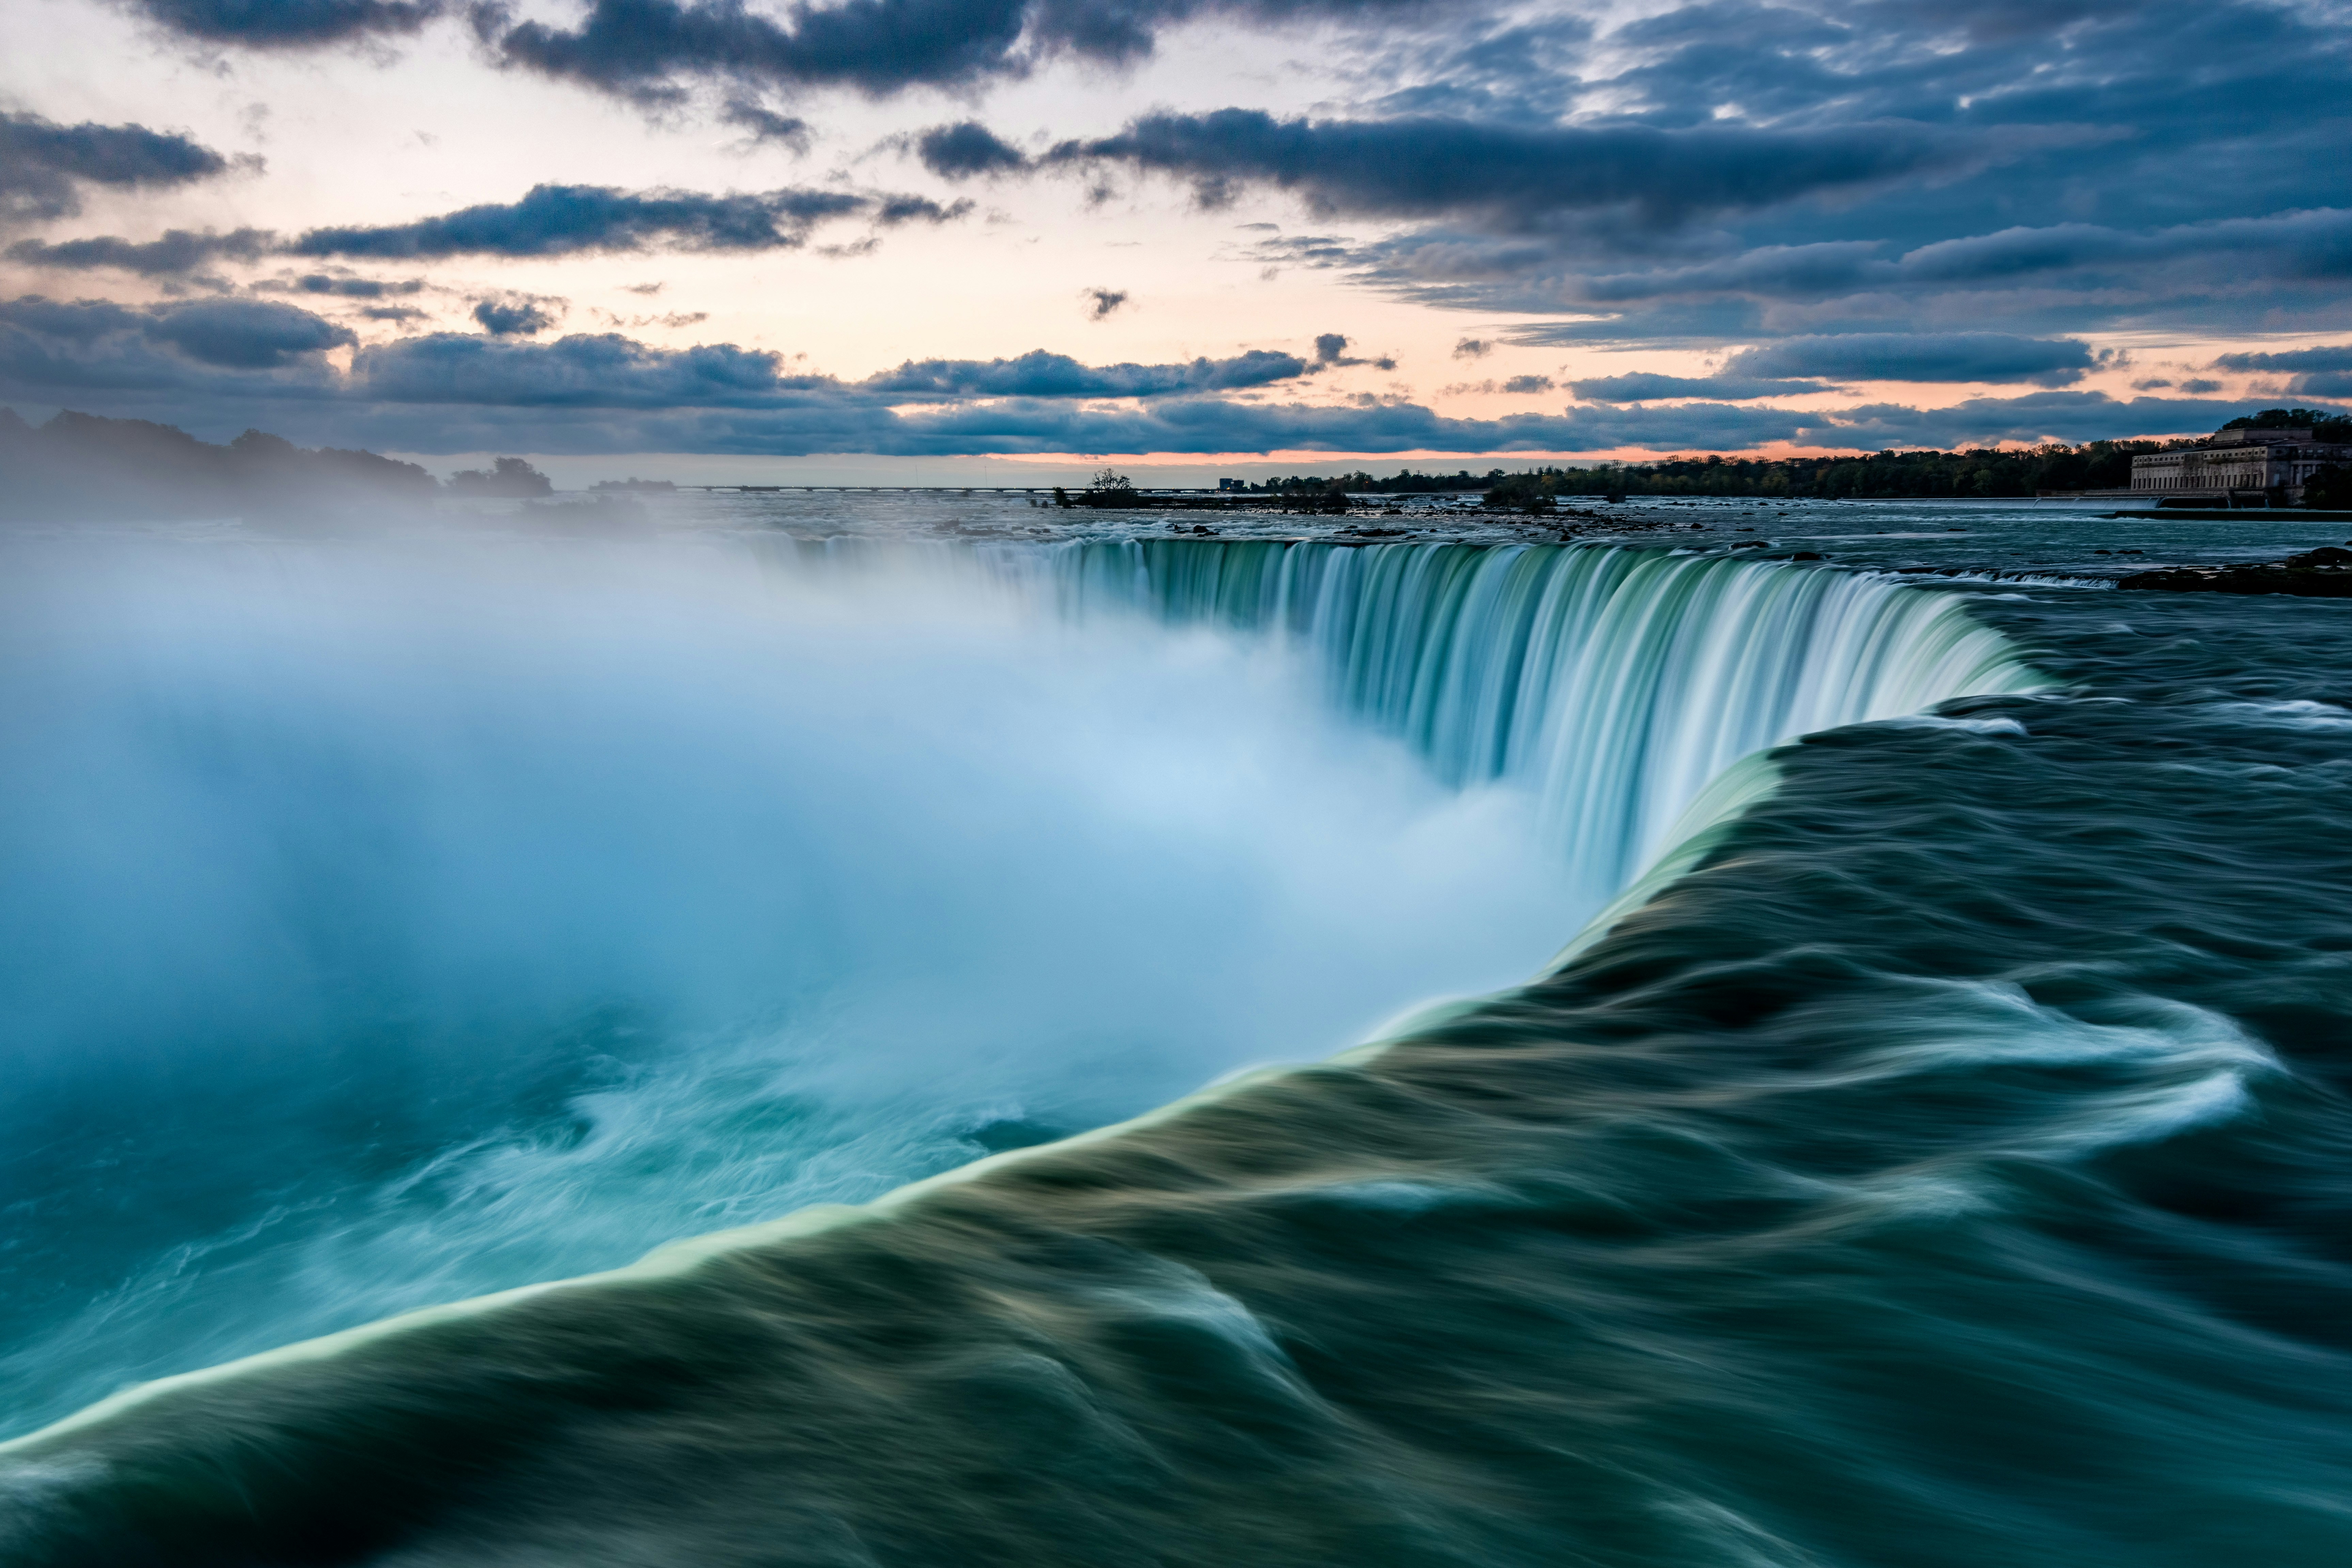 Niagara Falls on sunrise